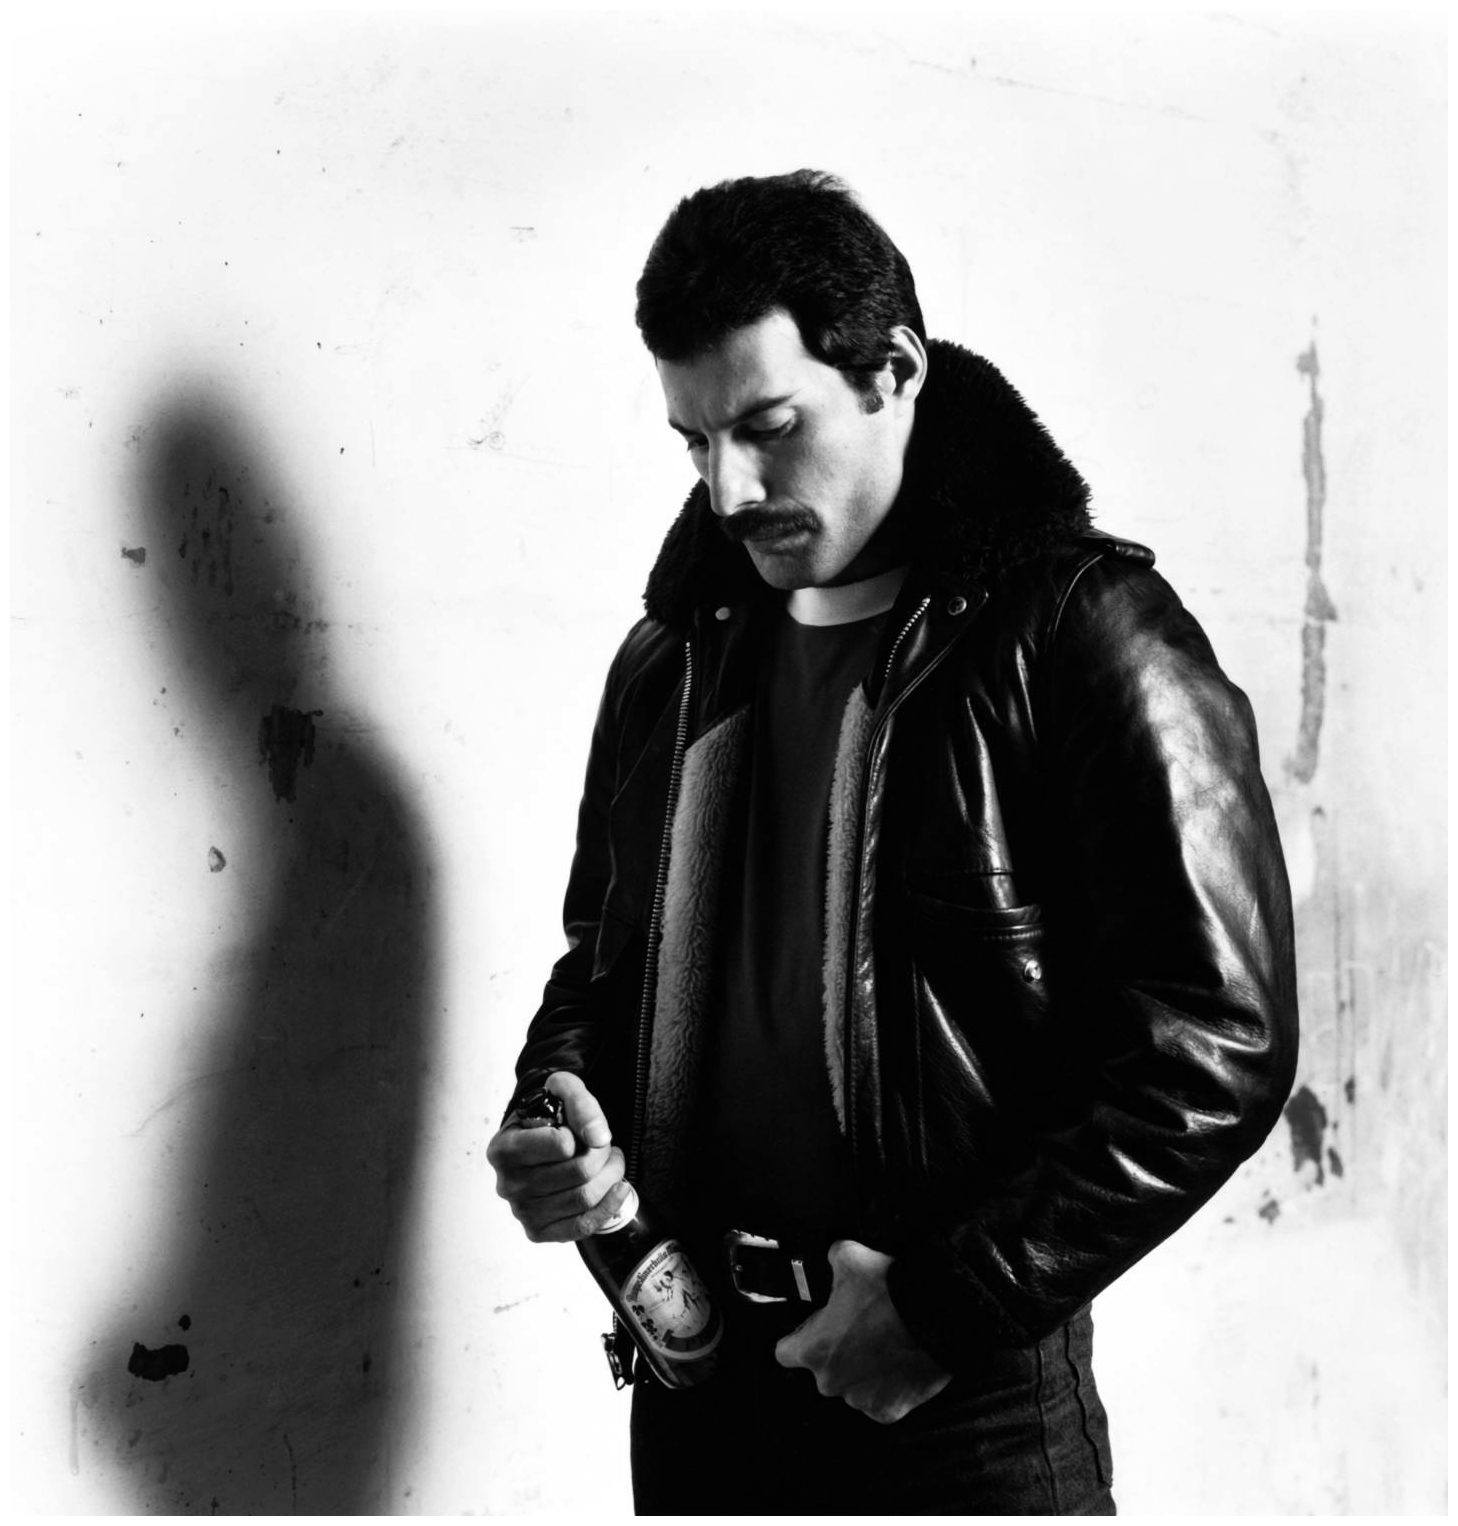 Freddie Mercury passed away 23 years ago today. Here he is 